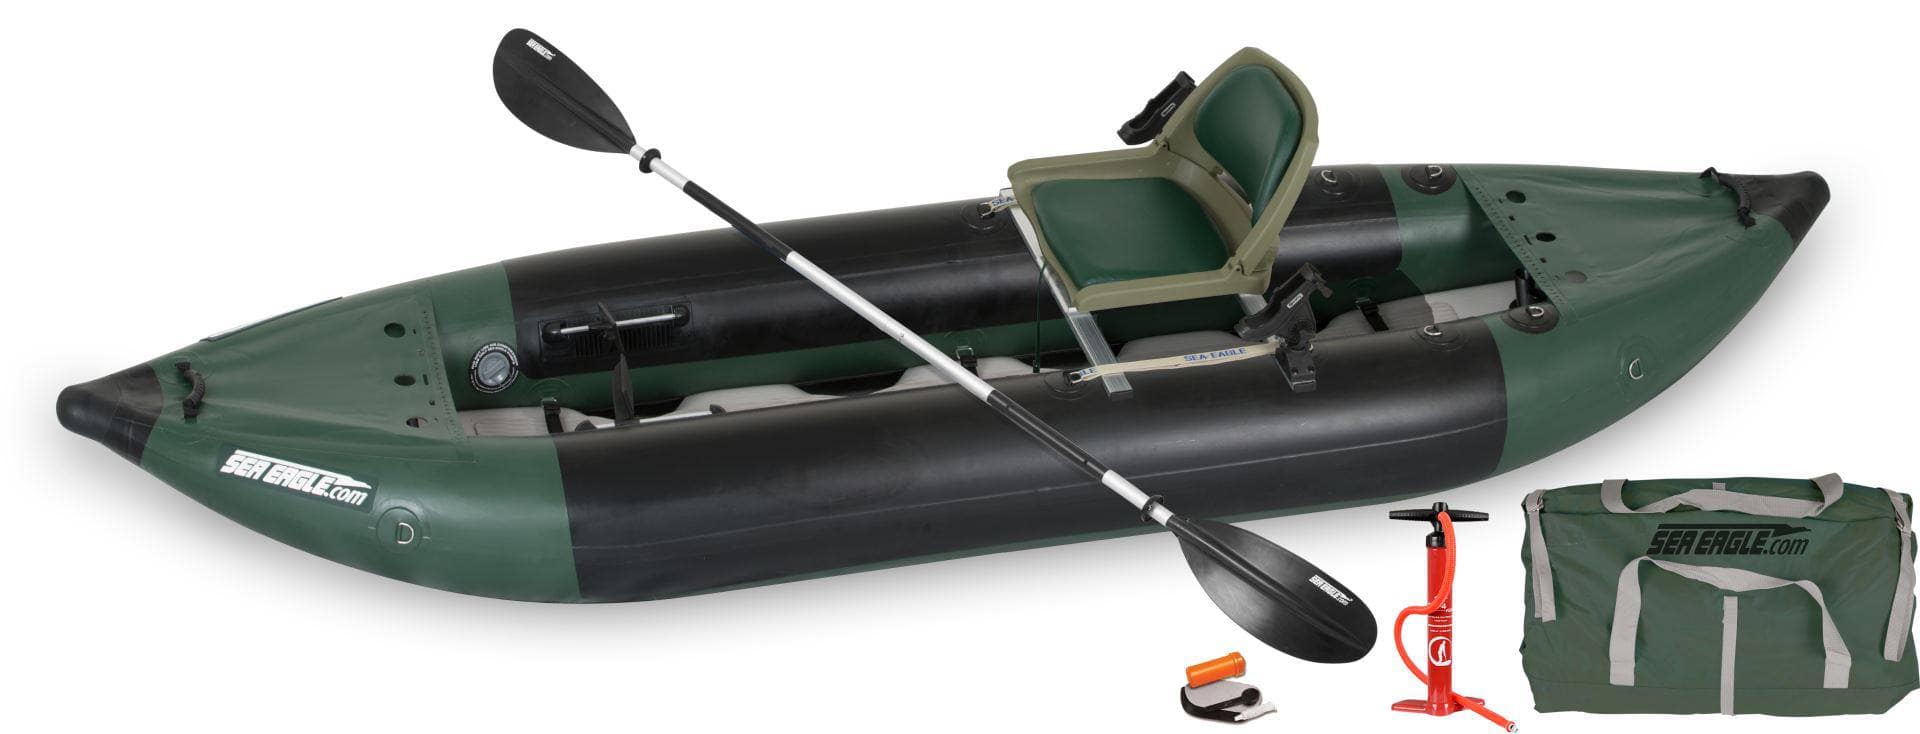 Sea Eagle 350fx Explorer Fishing Kayak Swivel Seat Fishing Rig